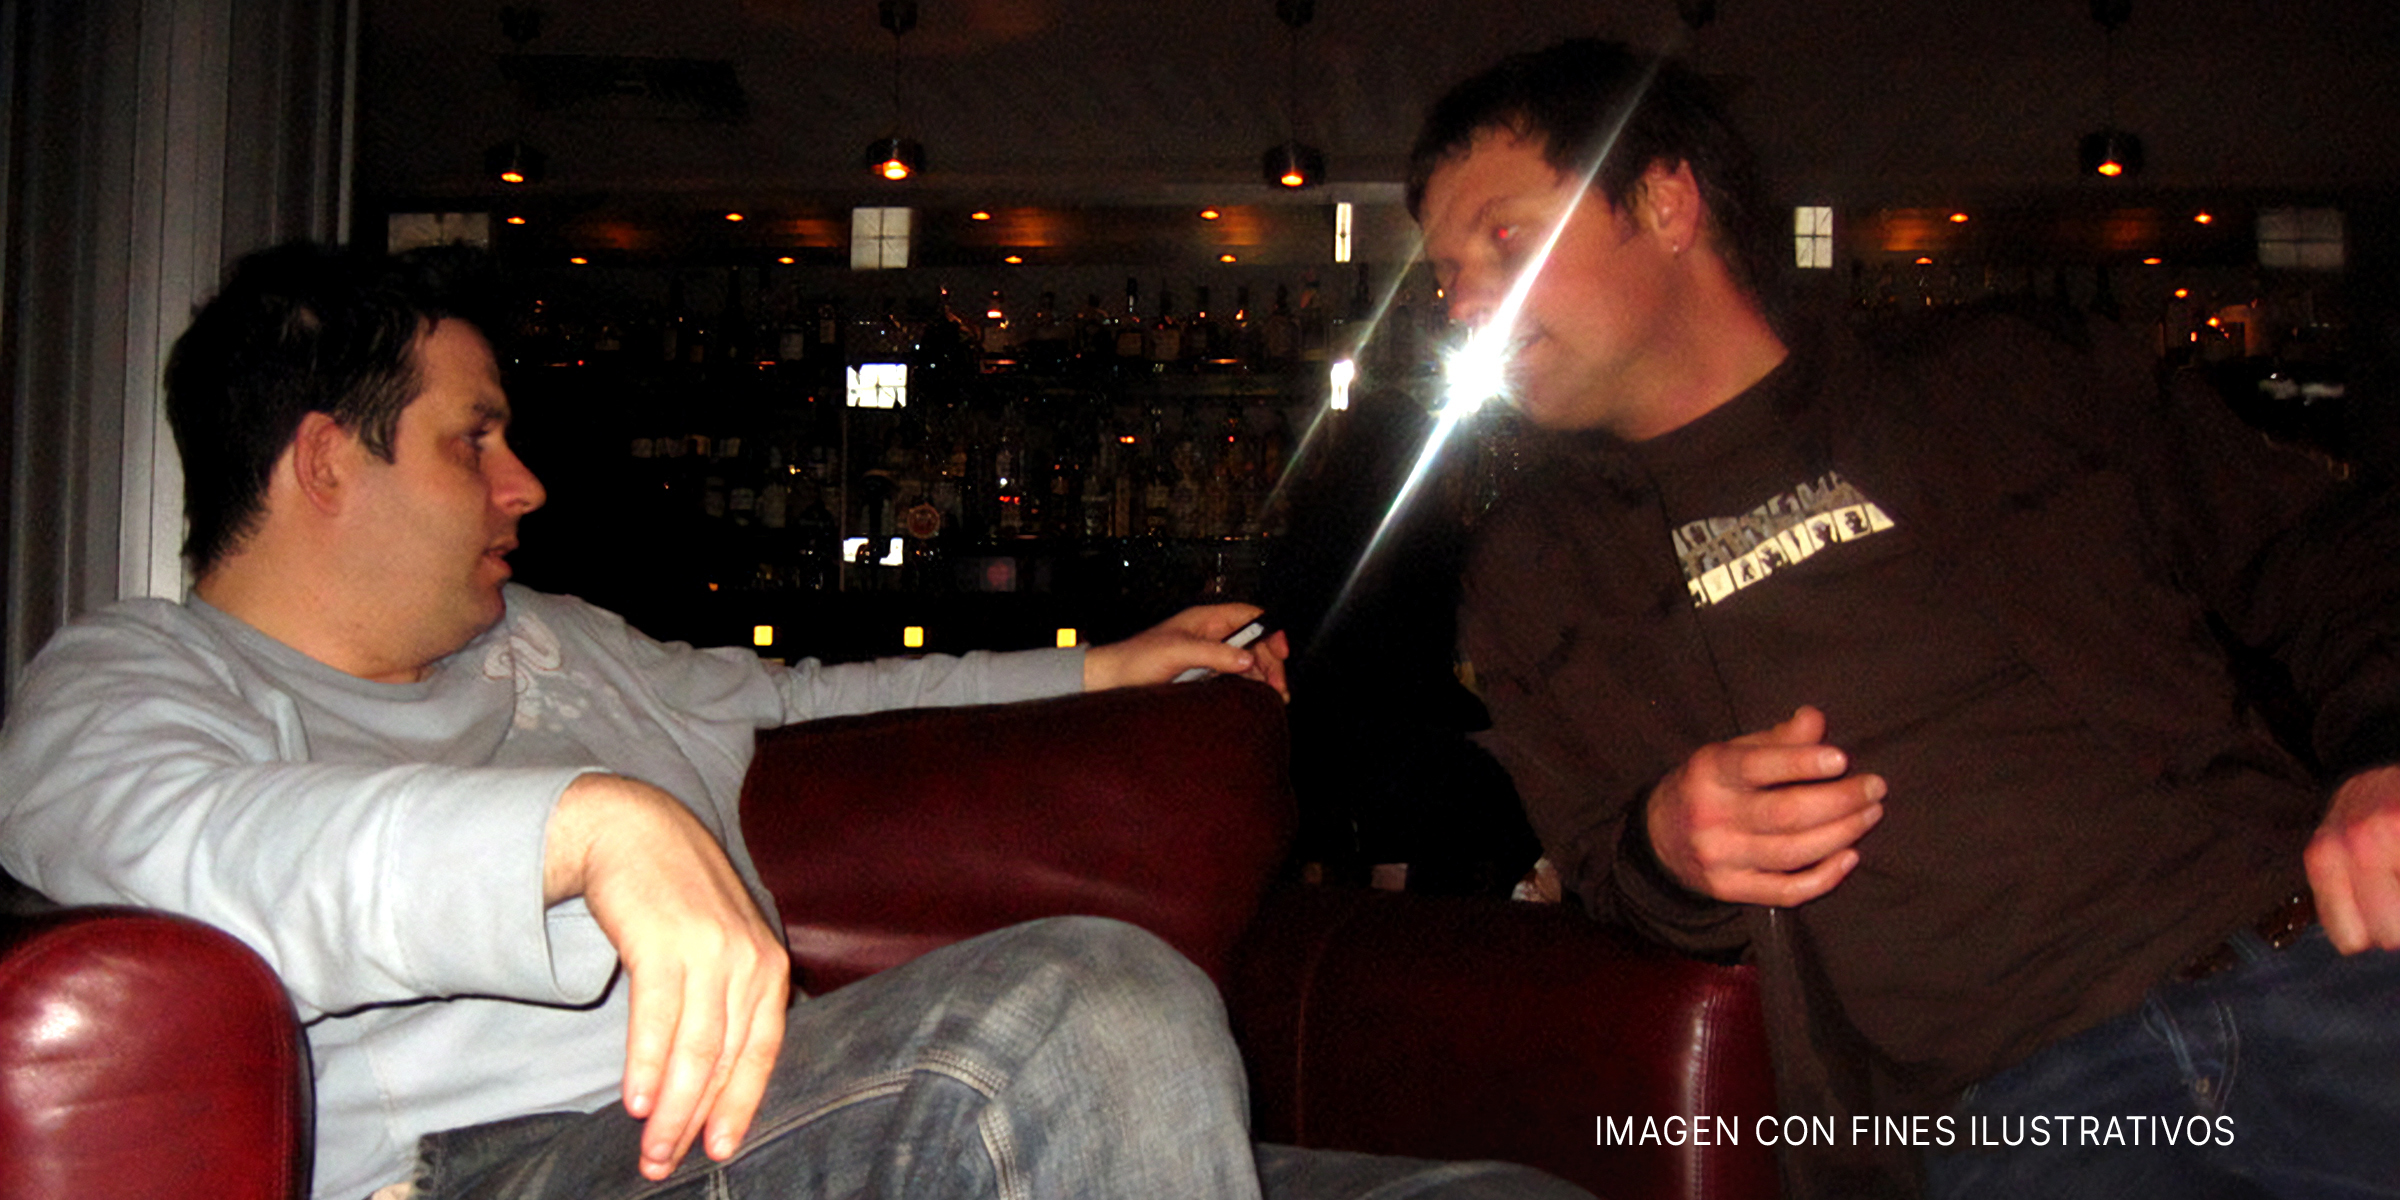 Amigos conversan | Foto: Flickr.com/russelljsmith (CC BY 2.0)